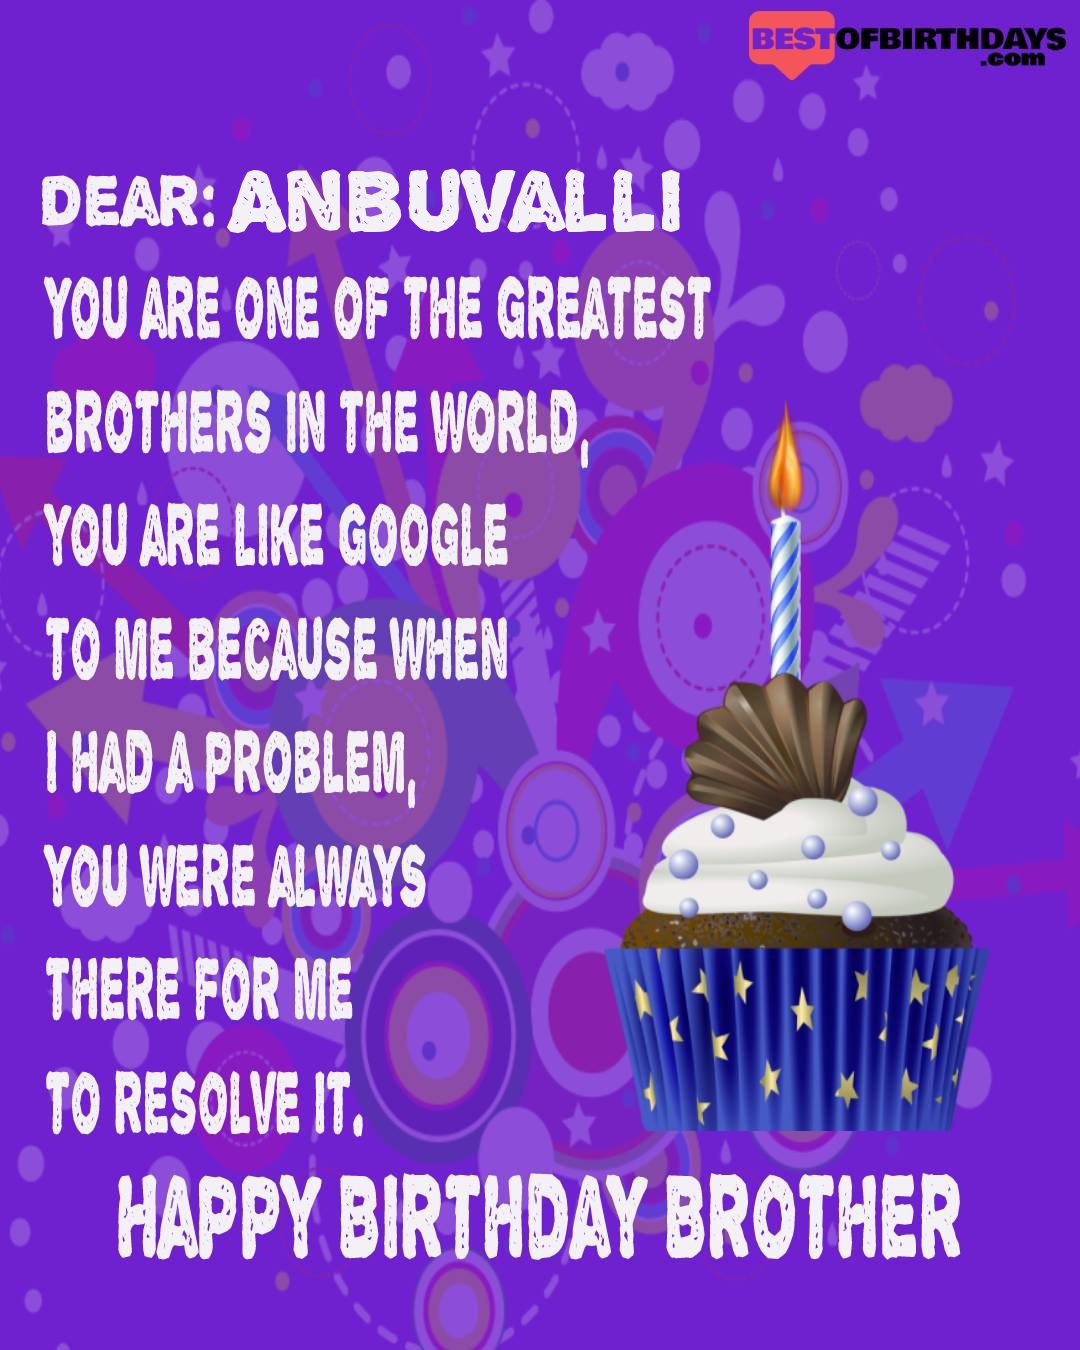 Happy birthday anbuvalli bhai brother bro